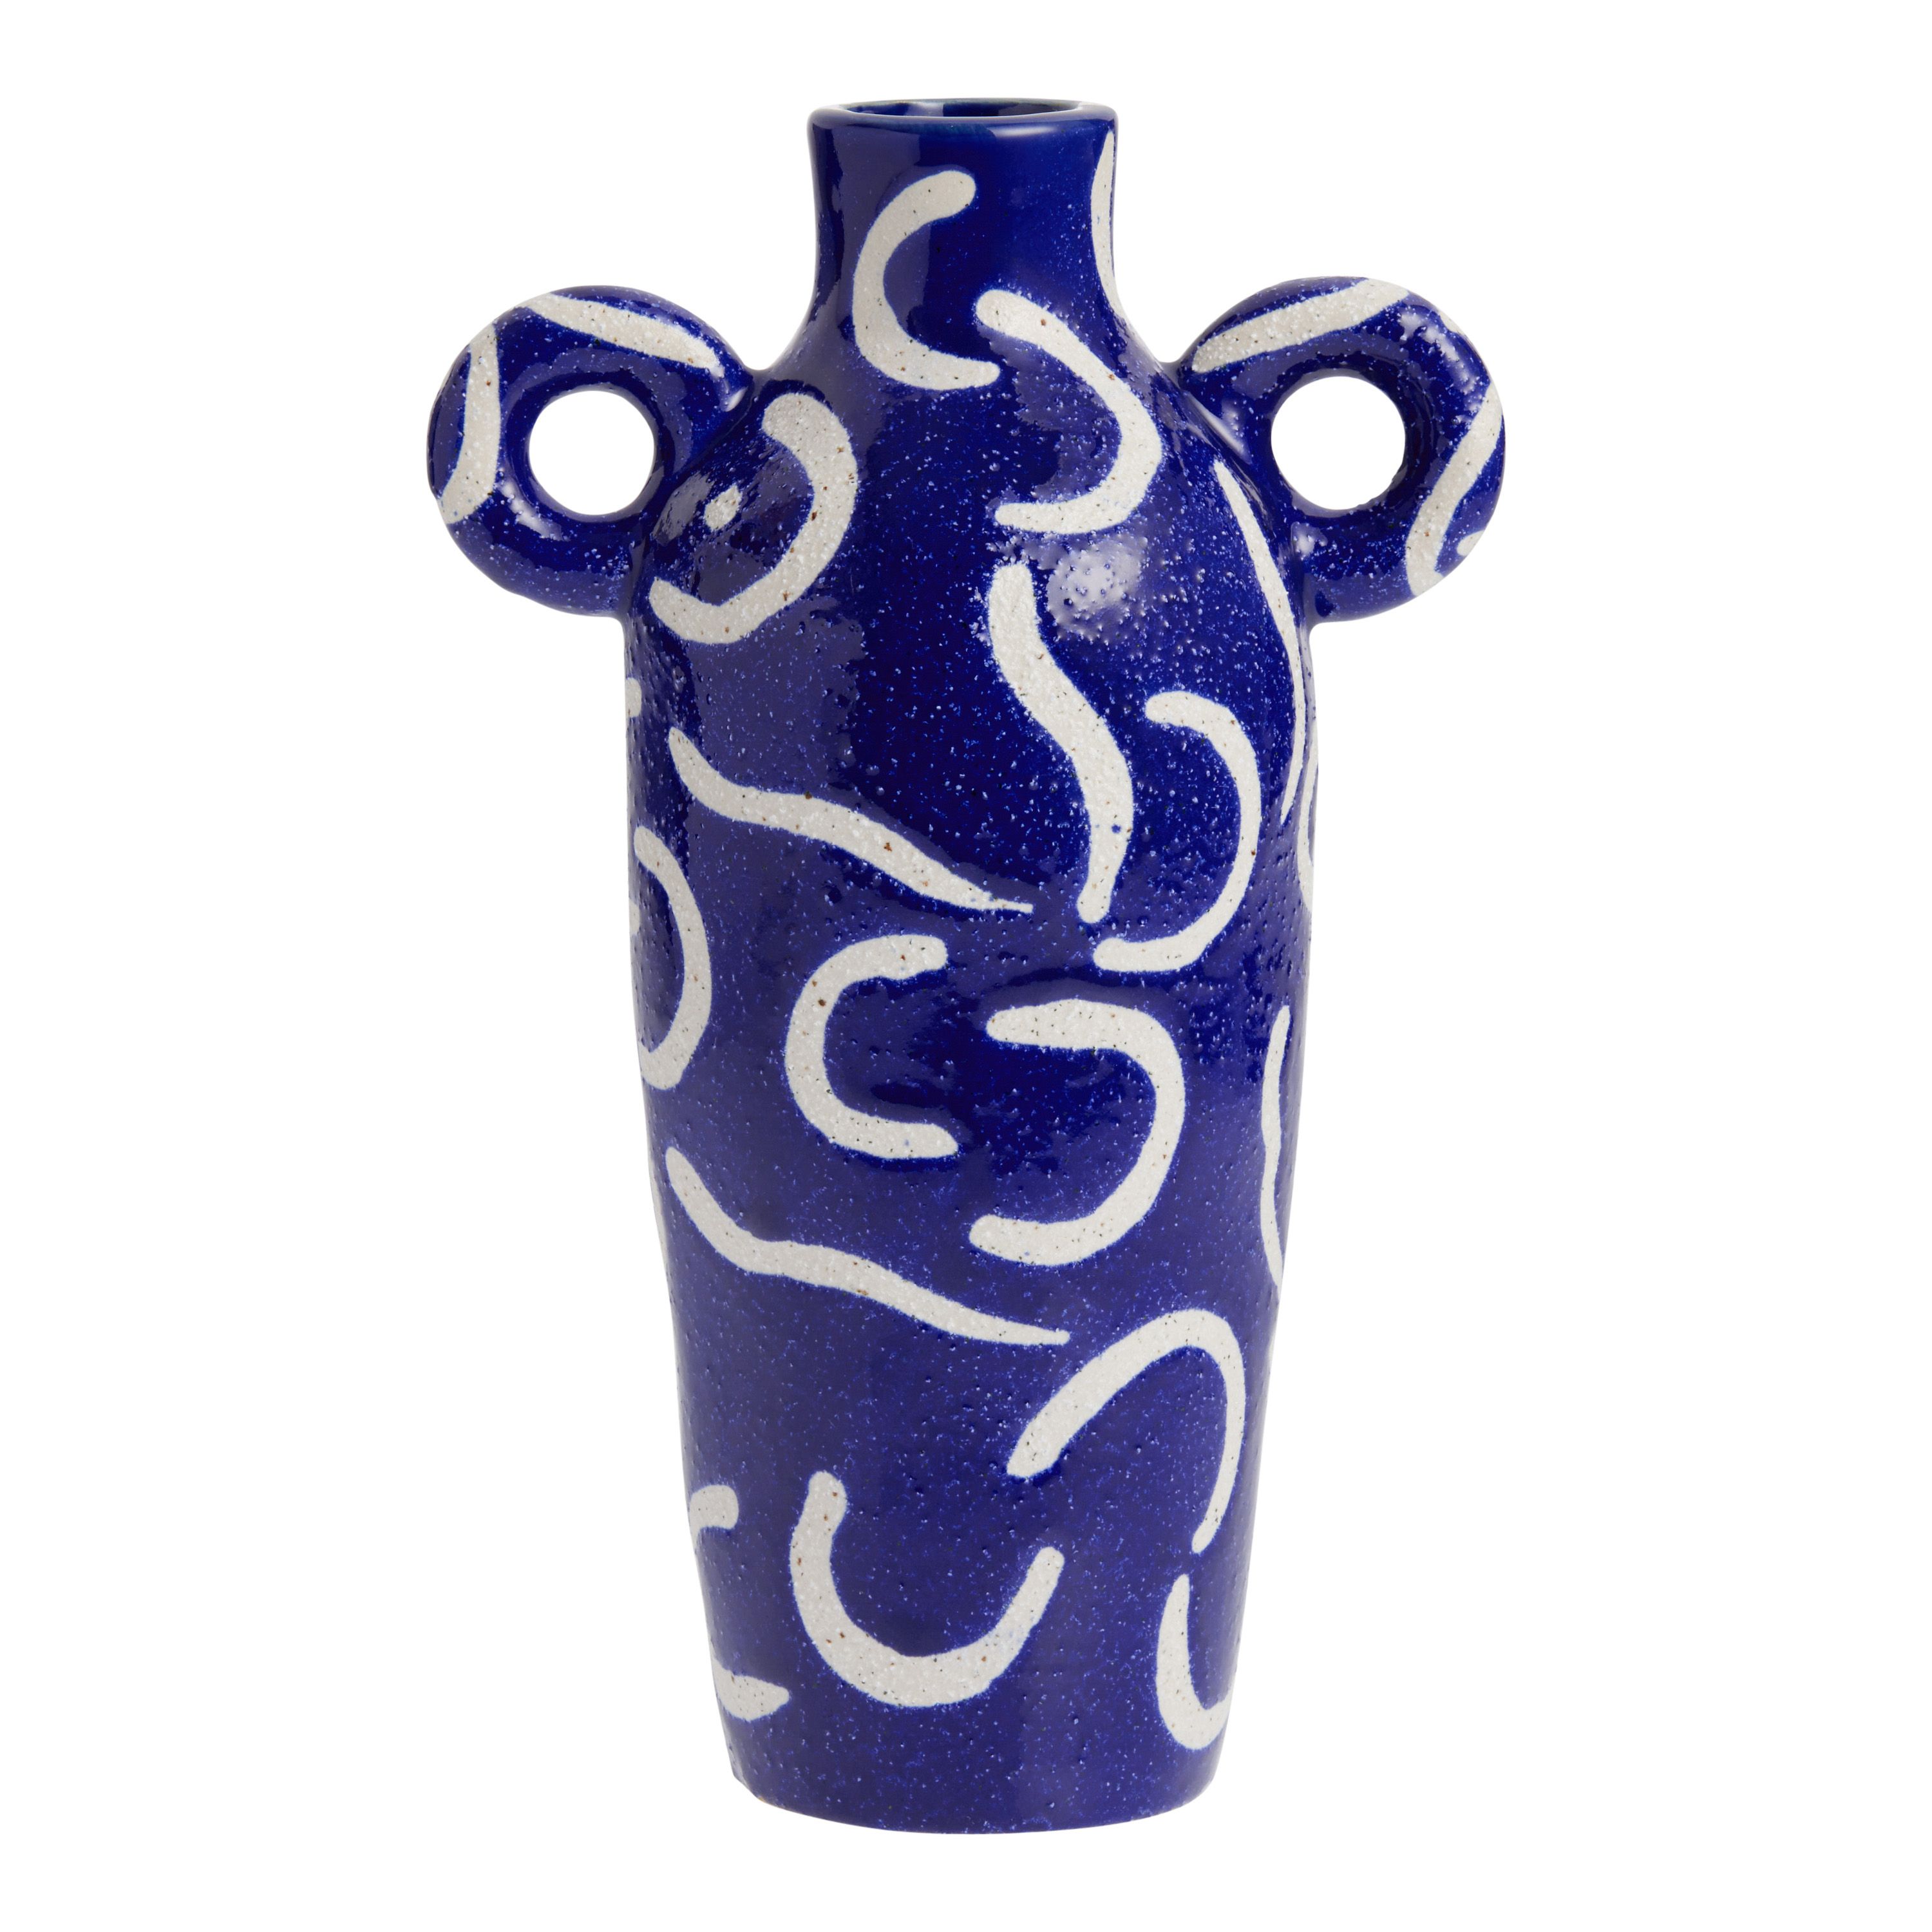 Blue and White Ceramic Jug Vase with Handles | World Market